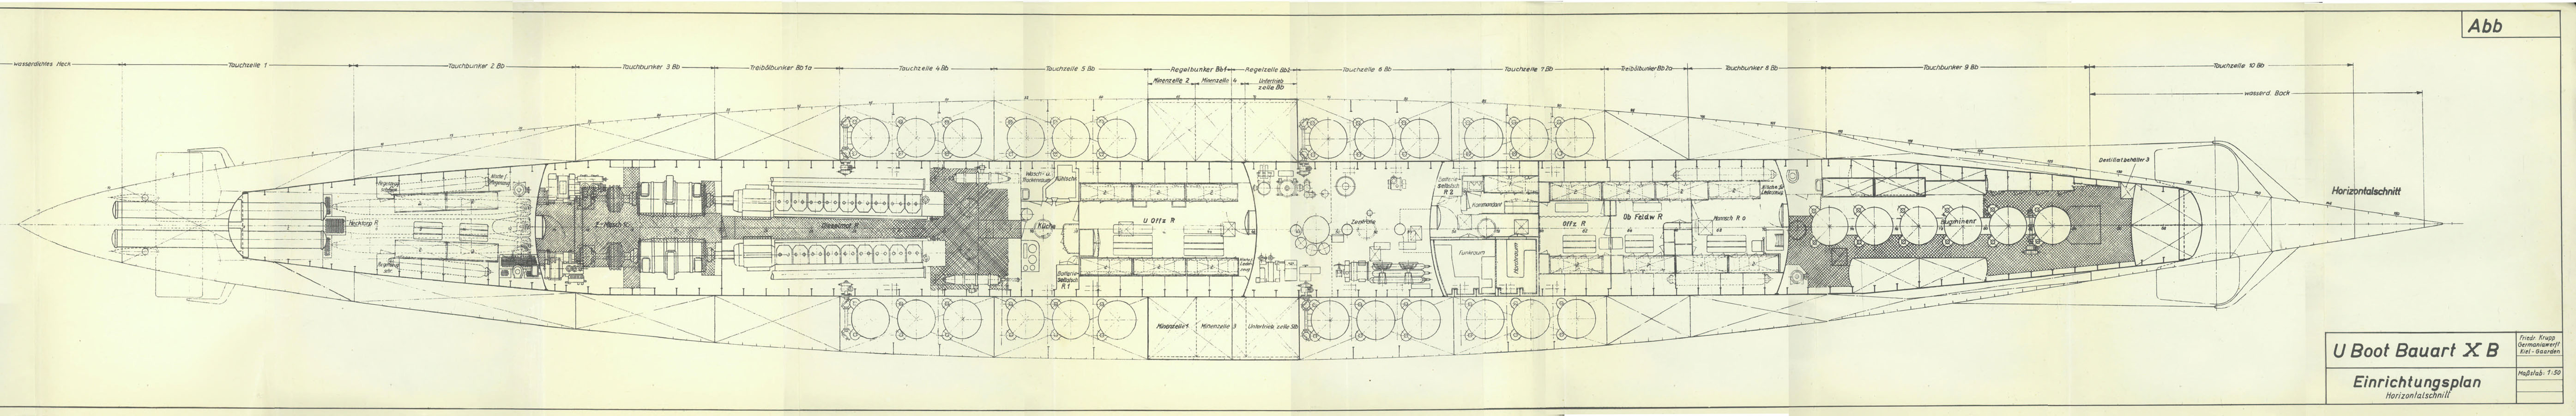 U-boat Archive - Manual Type XB